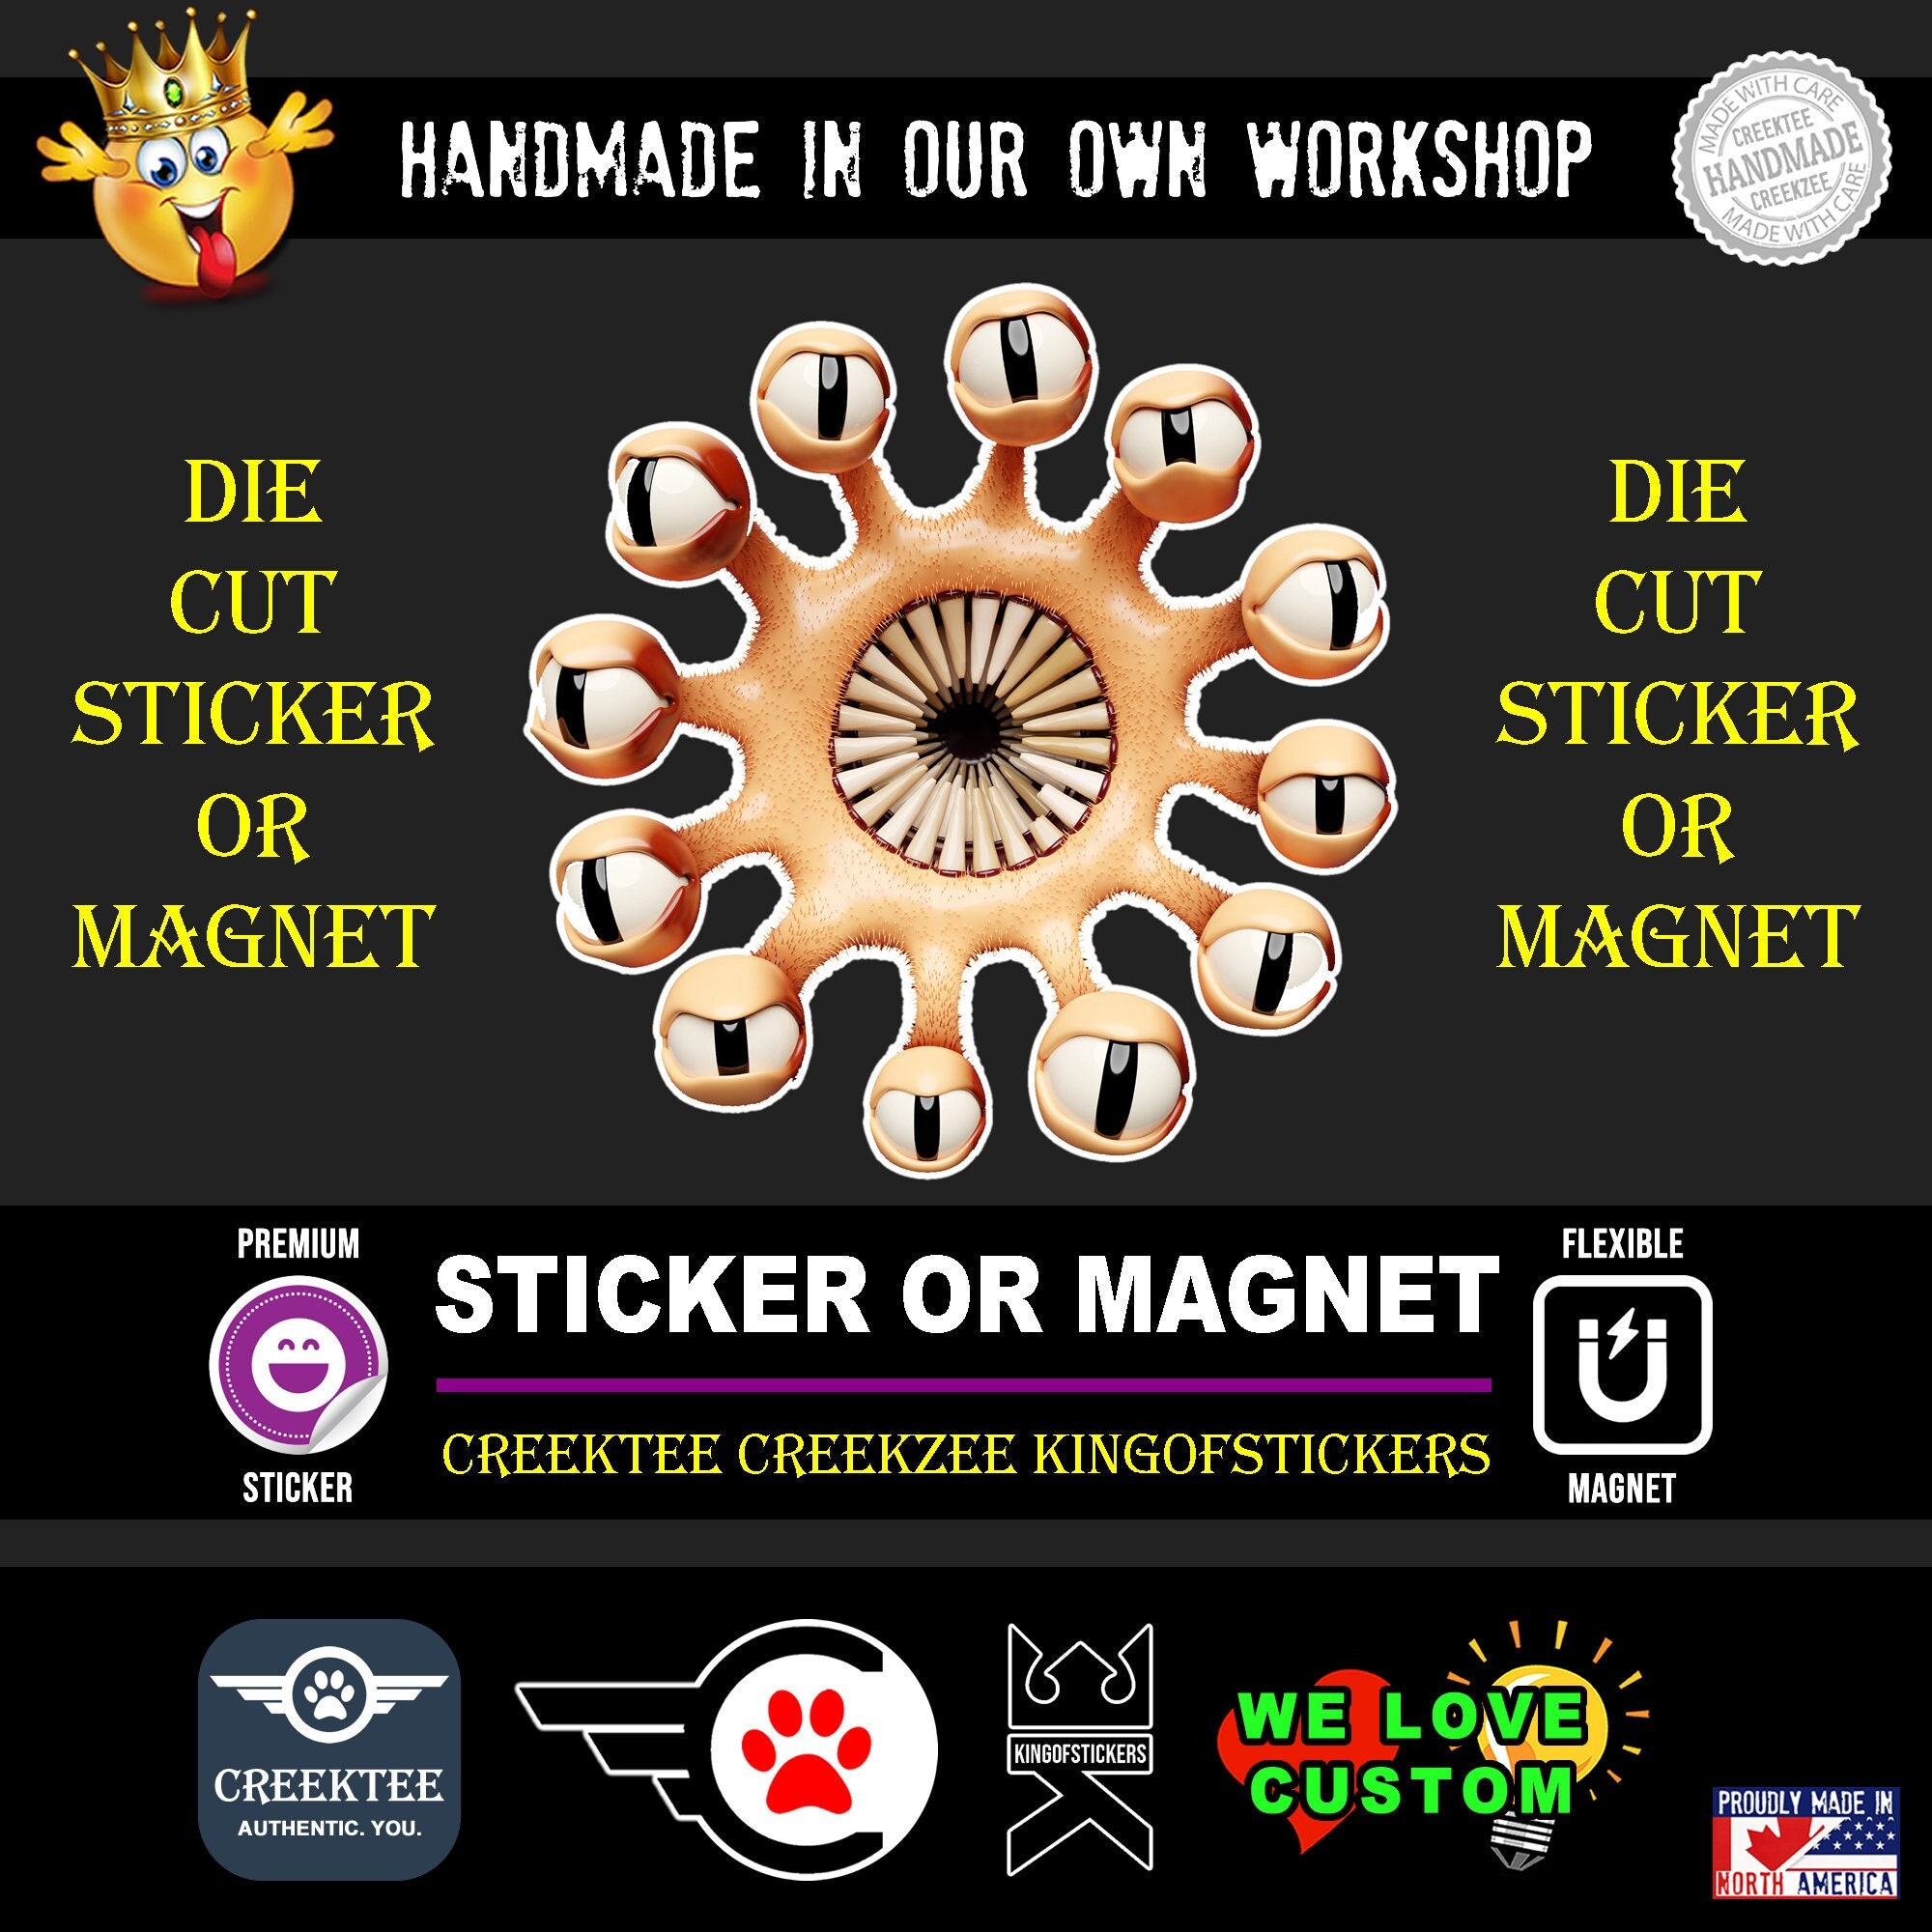 MULTI-One Eyed Monster Smiling Die-Cut sticker or magnet in various widths, 3